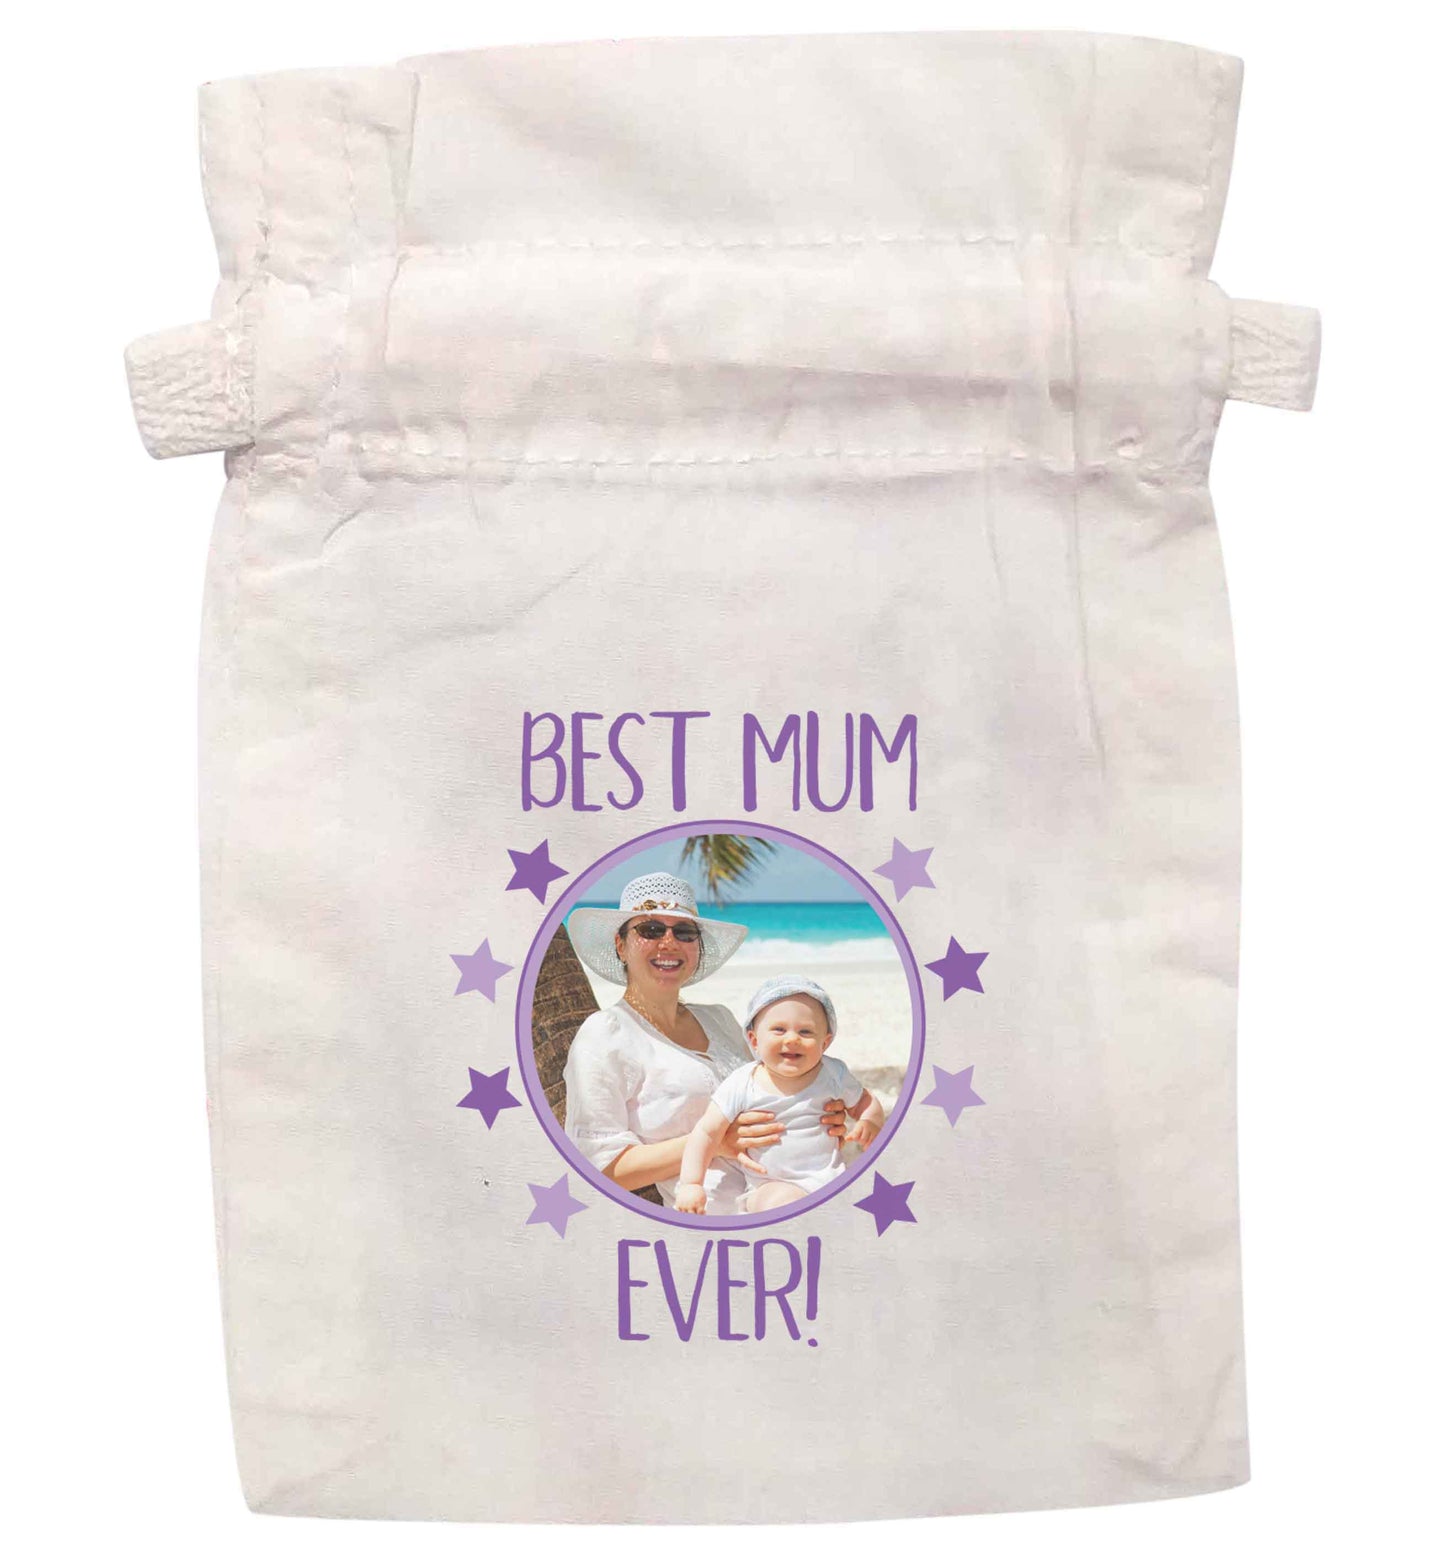 Best mum ever! | XS - L | Pouch / Drawstring bag / Sack | Organic Cotton | Bulk discounts available!